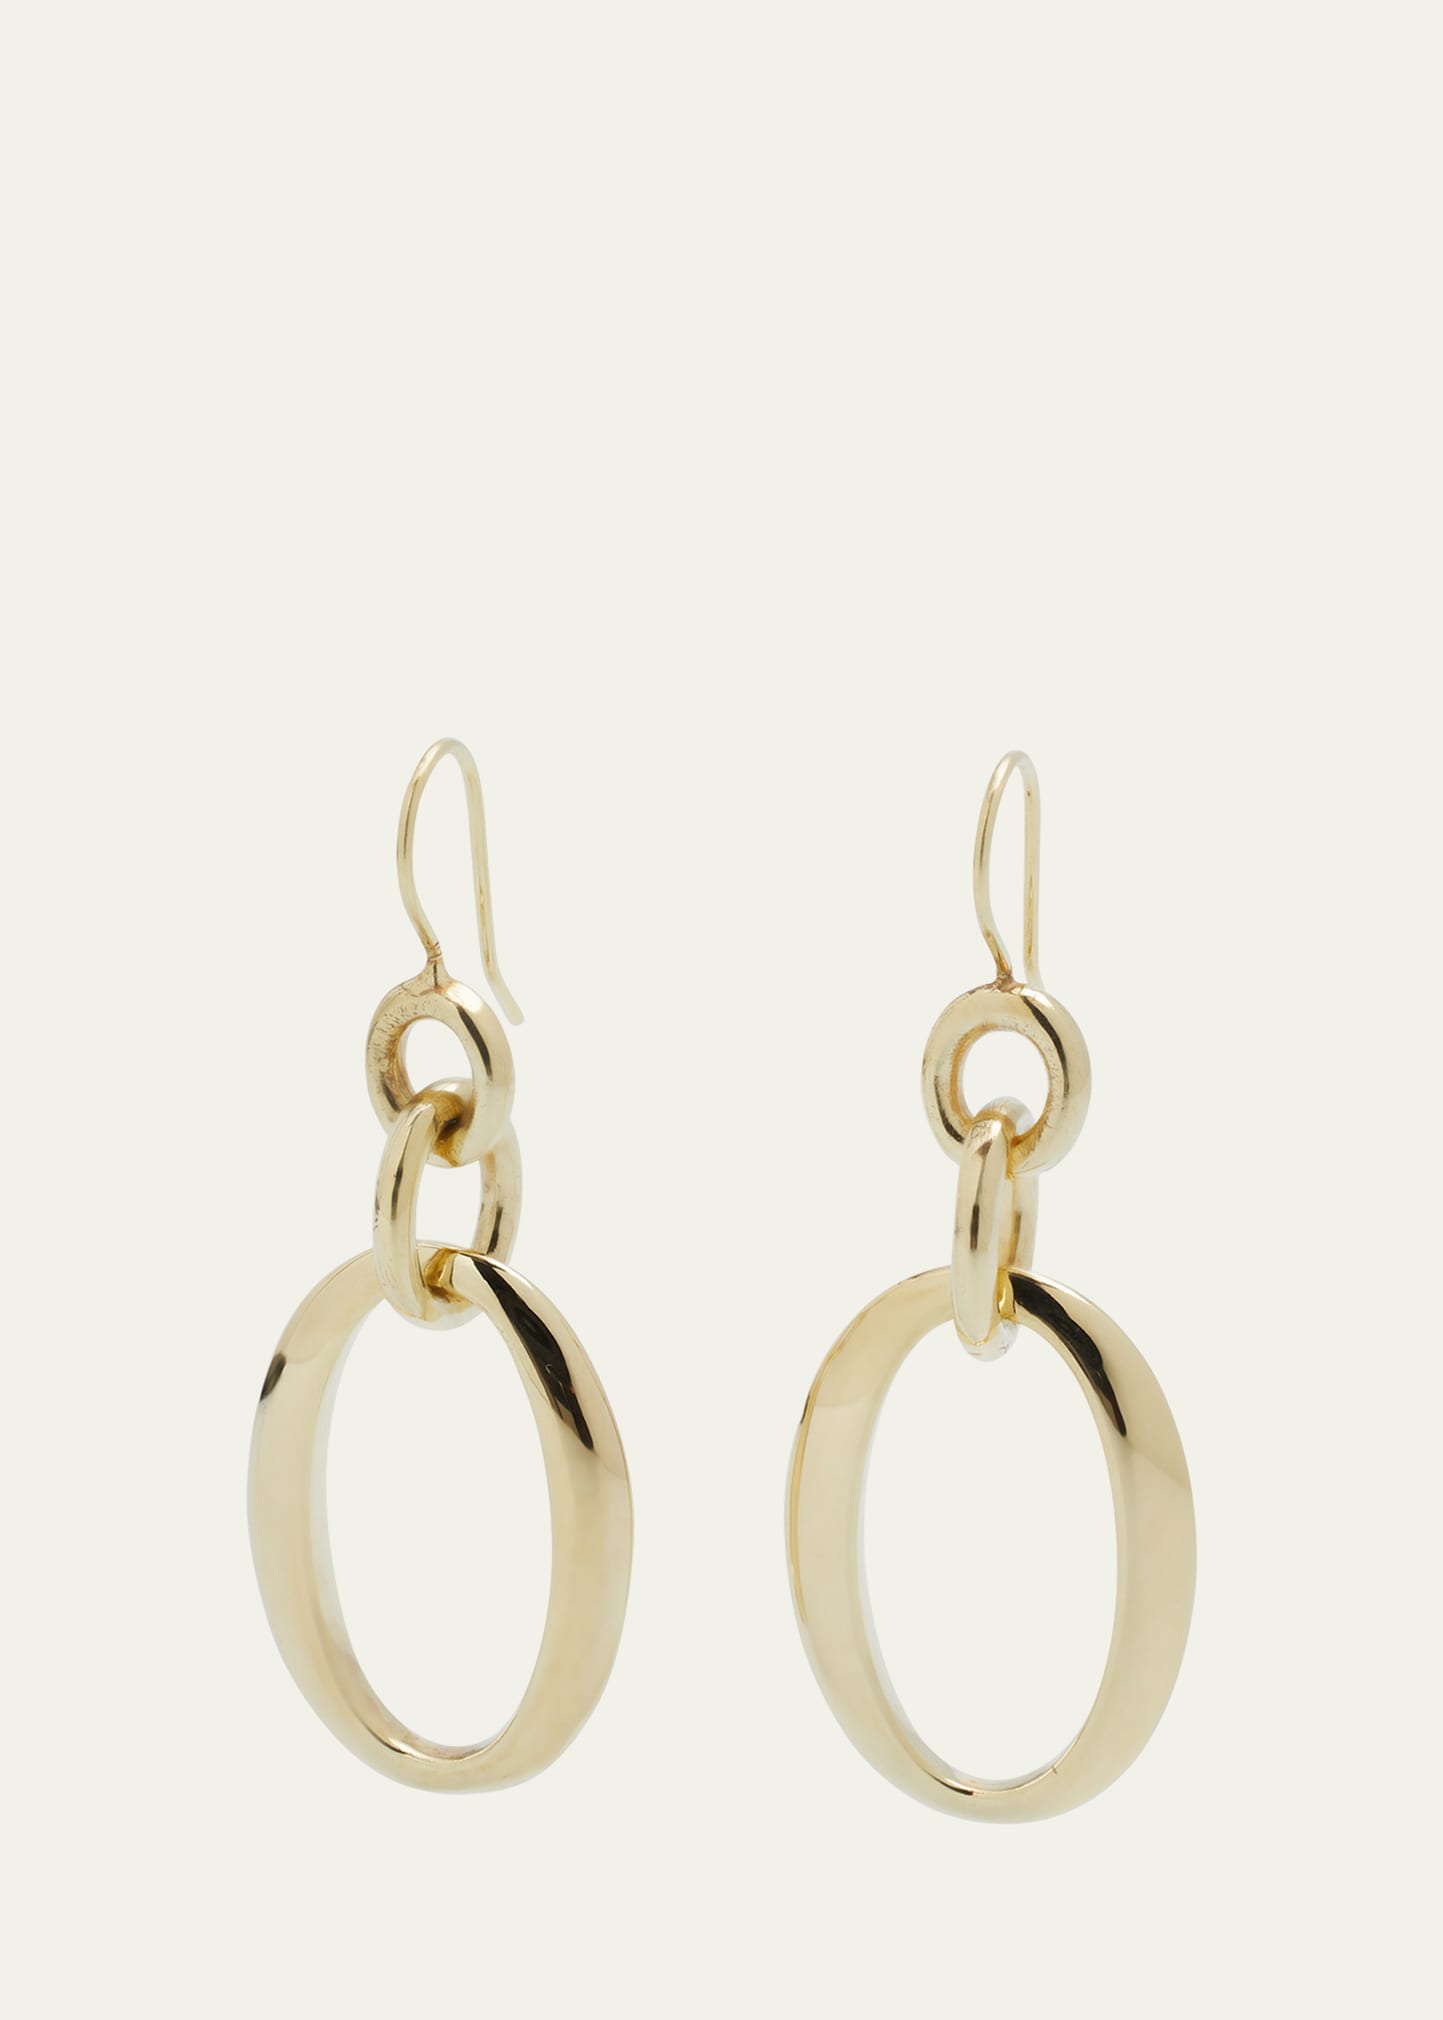 Ippolita Short Oval Link Earrings in 18K Gold